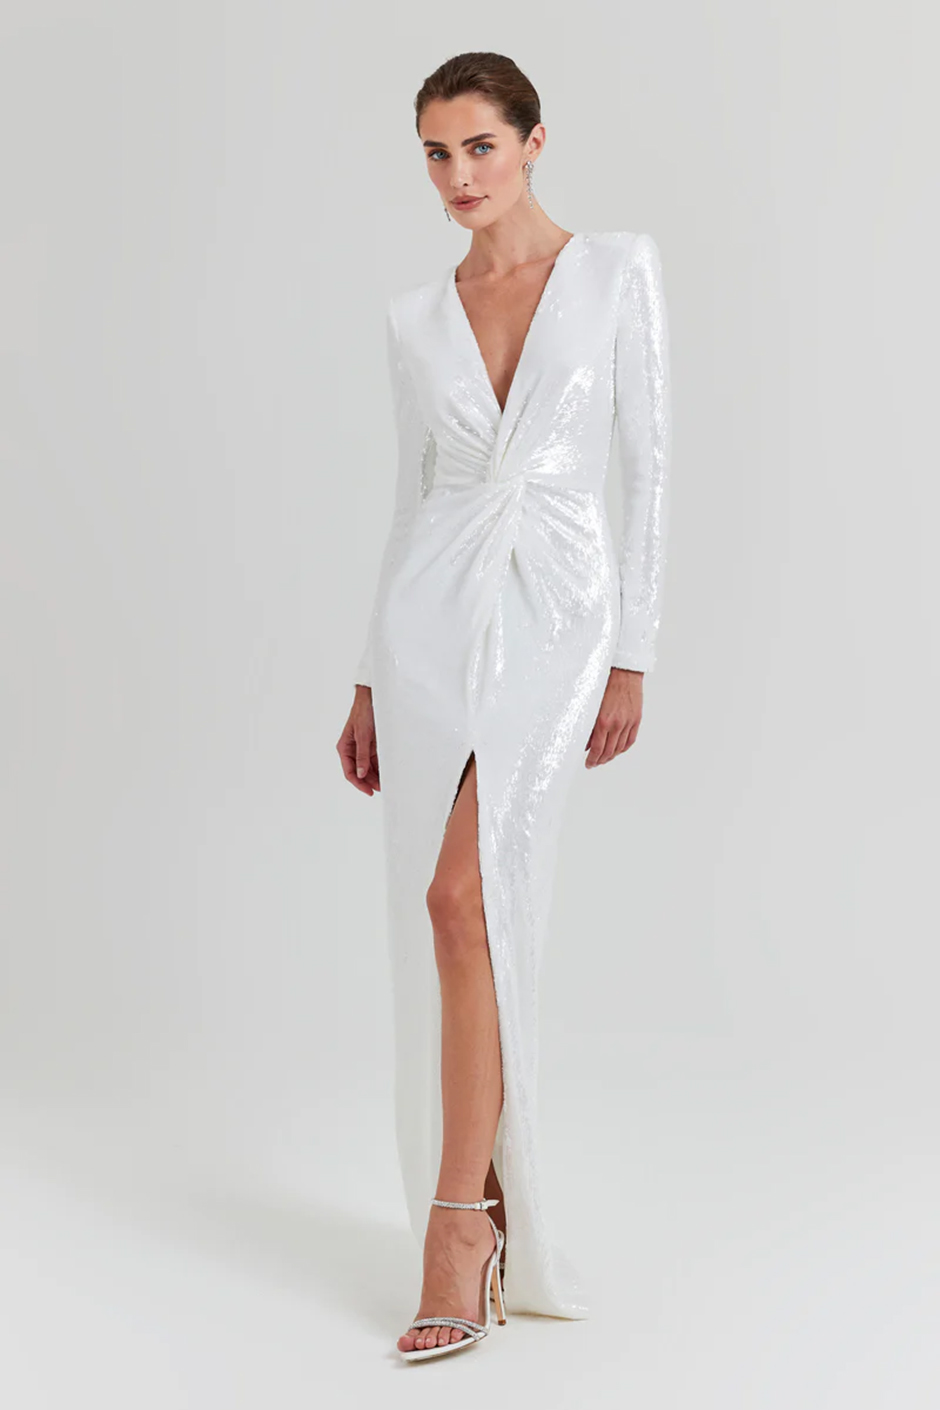 Long-sleeve-white-sequin-maxi-dress- Nadine Merabi.jpg